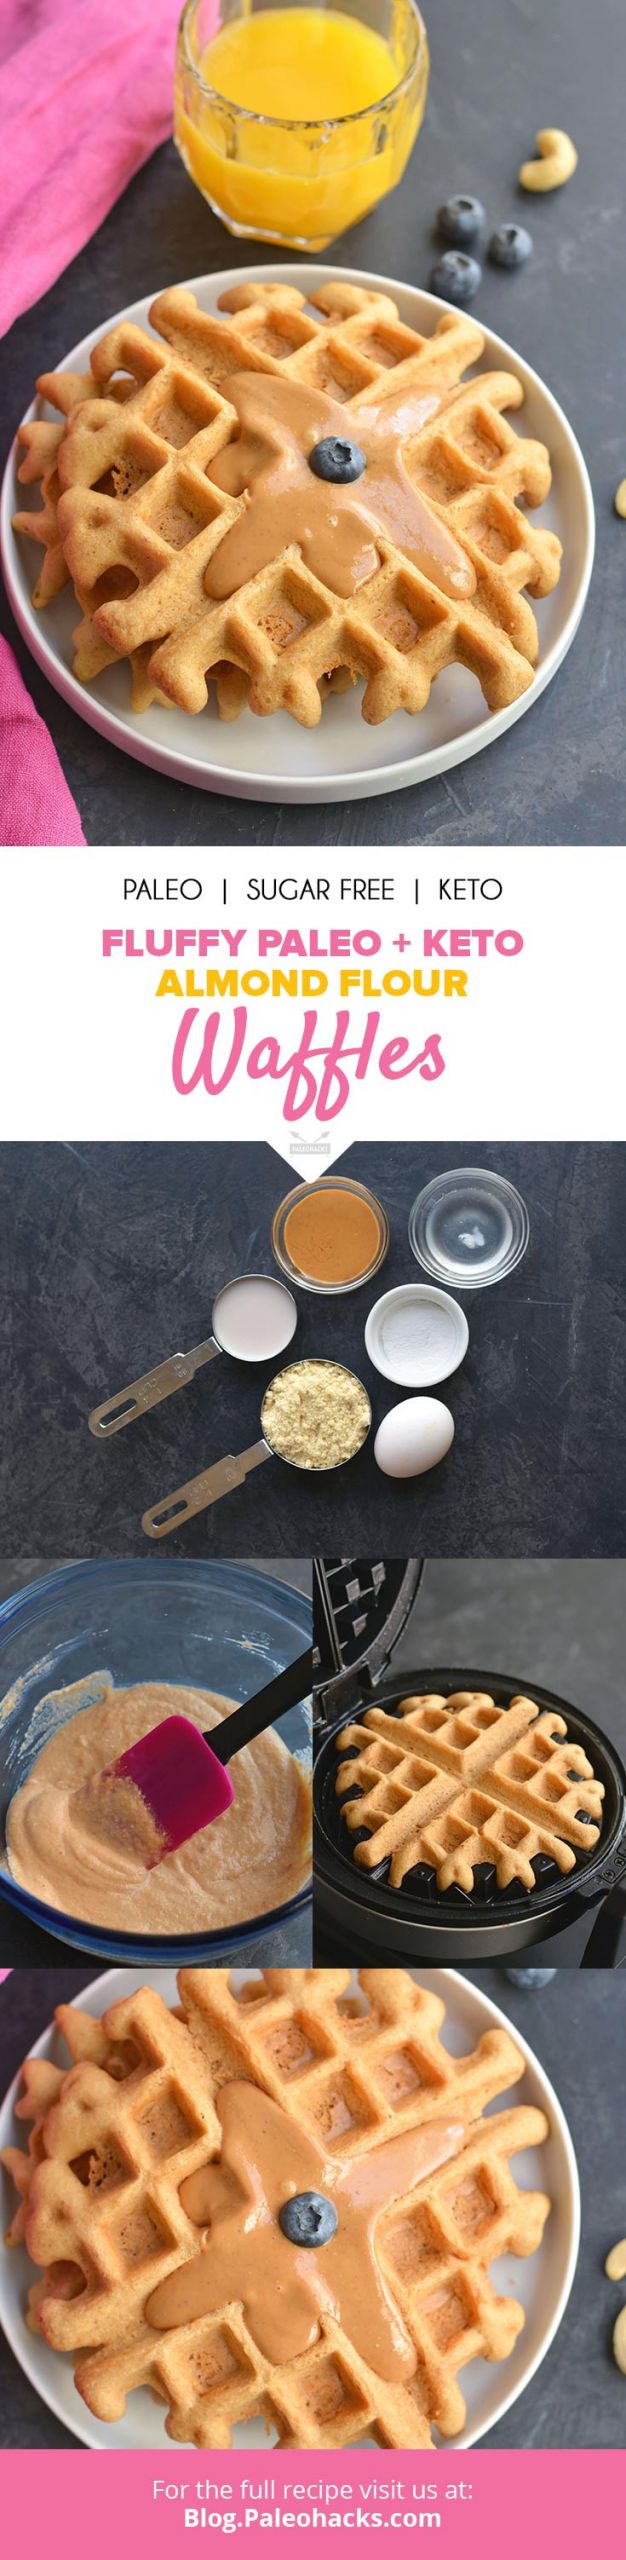 Keto Waffles With Almond Flour
 Fluffy Paleo Keto Almond Flour Waffles